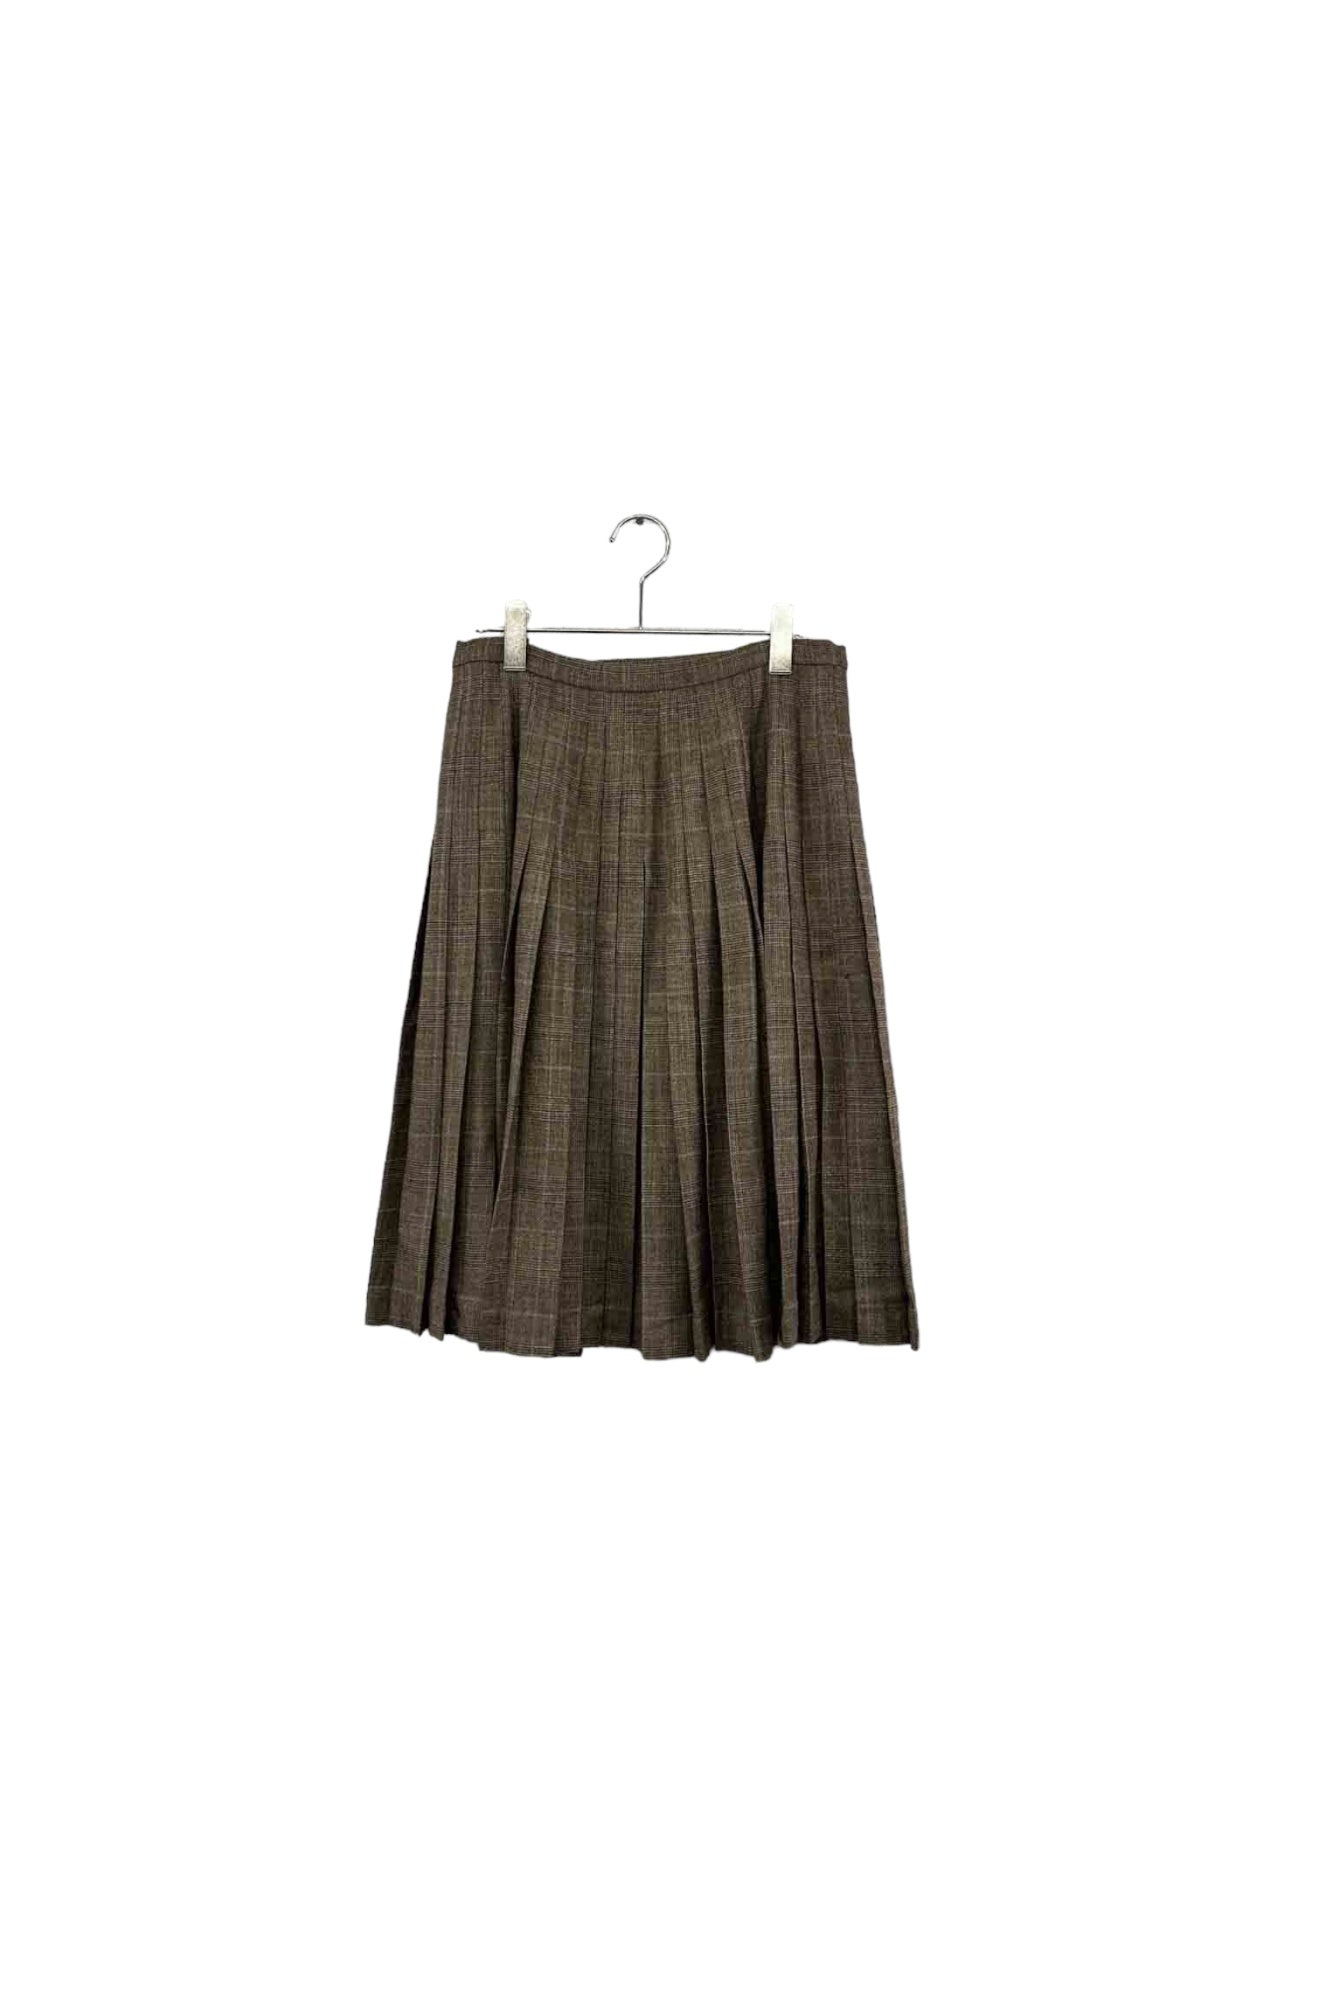 Chloe brown check pleated skirt